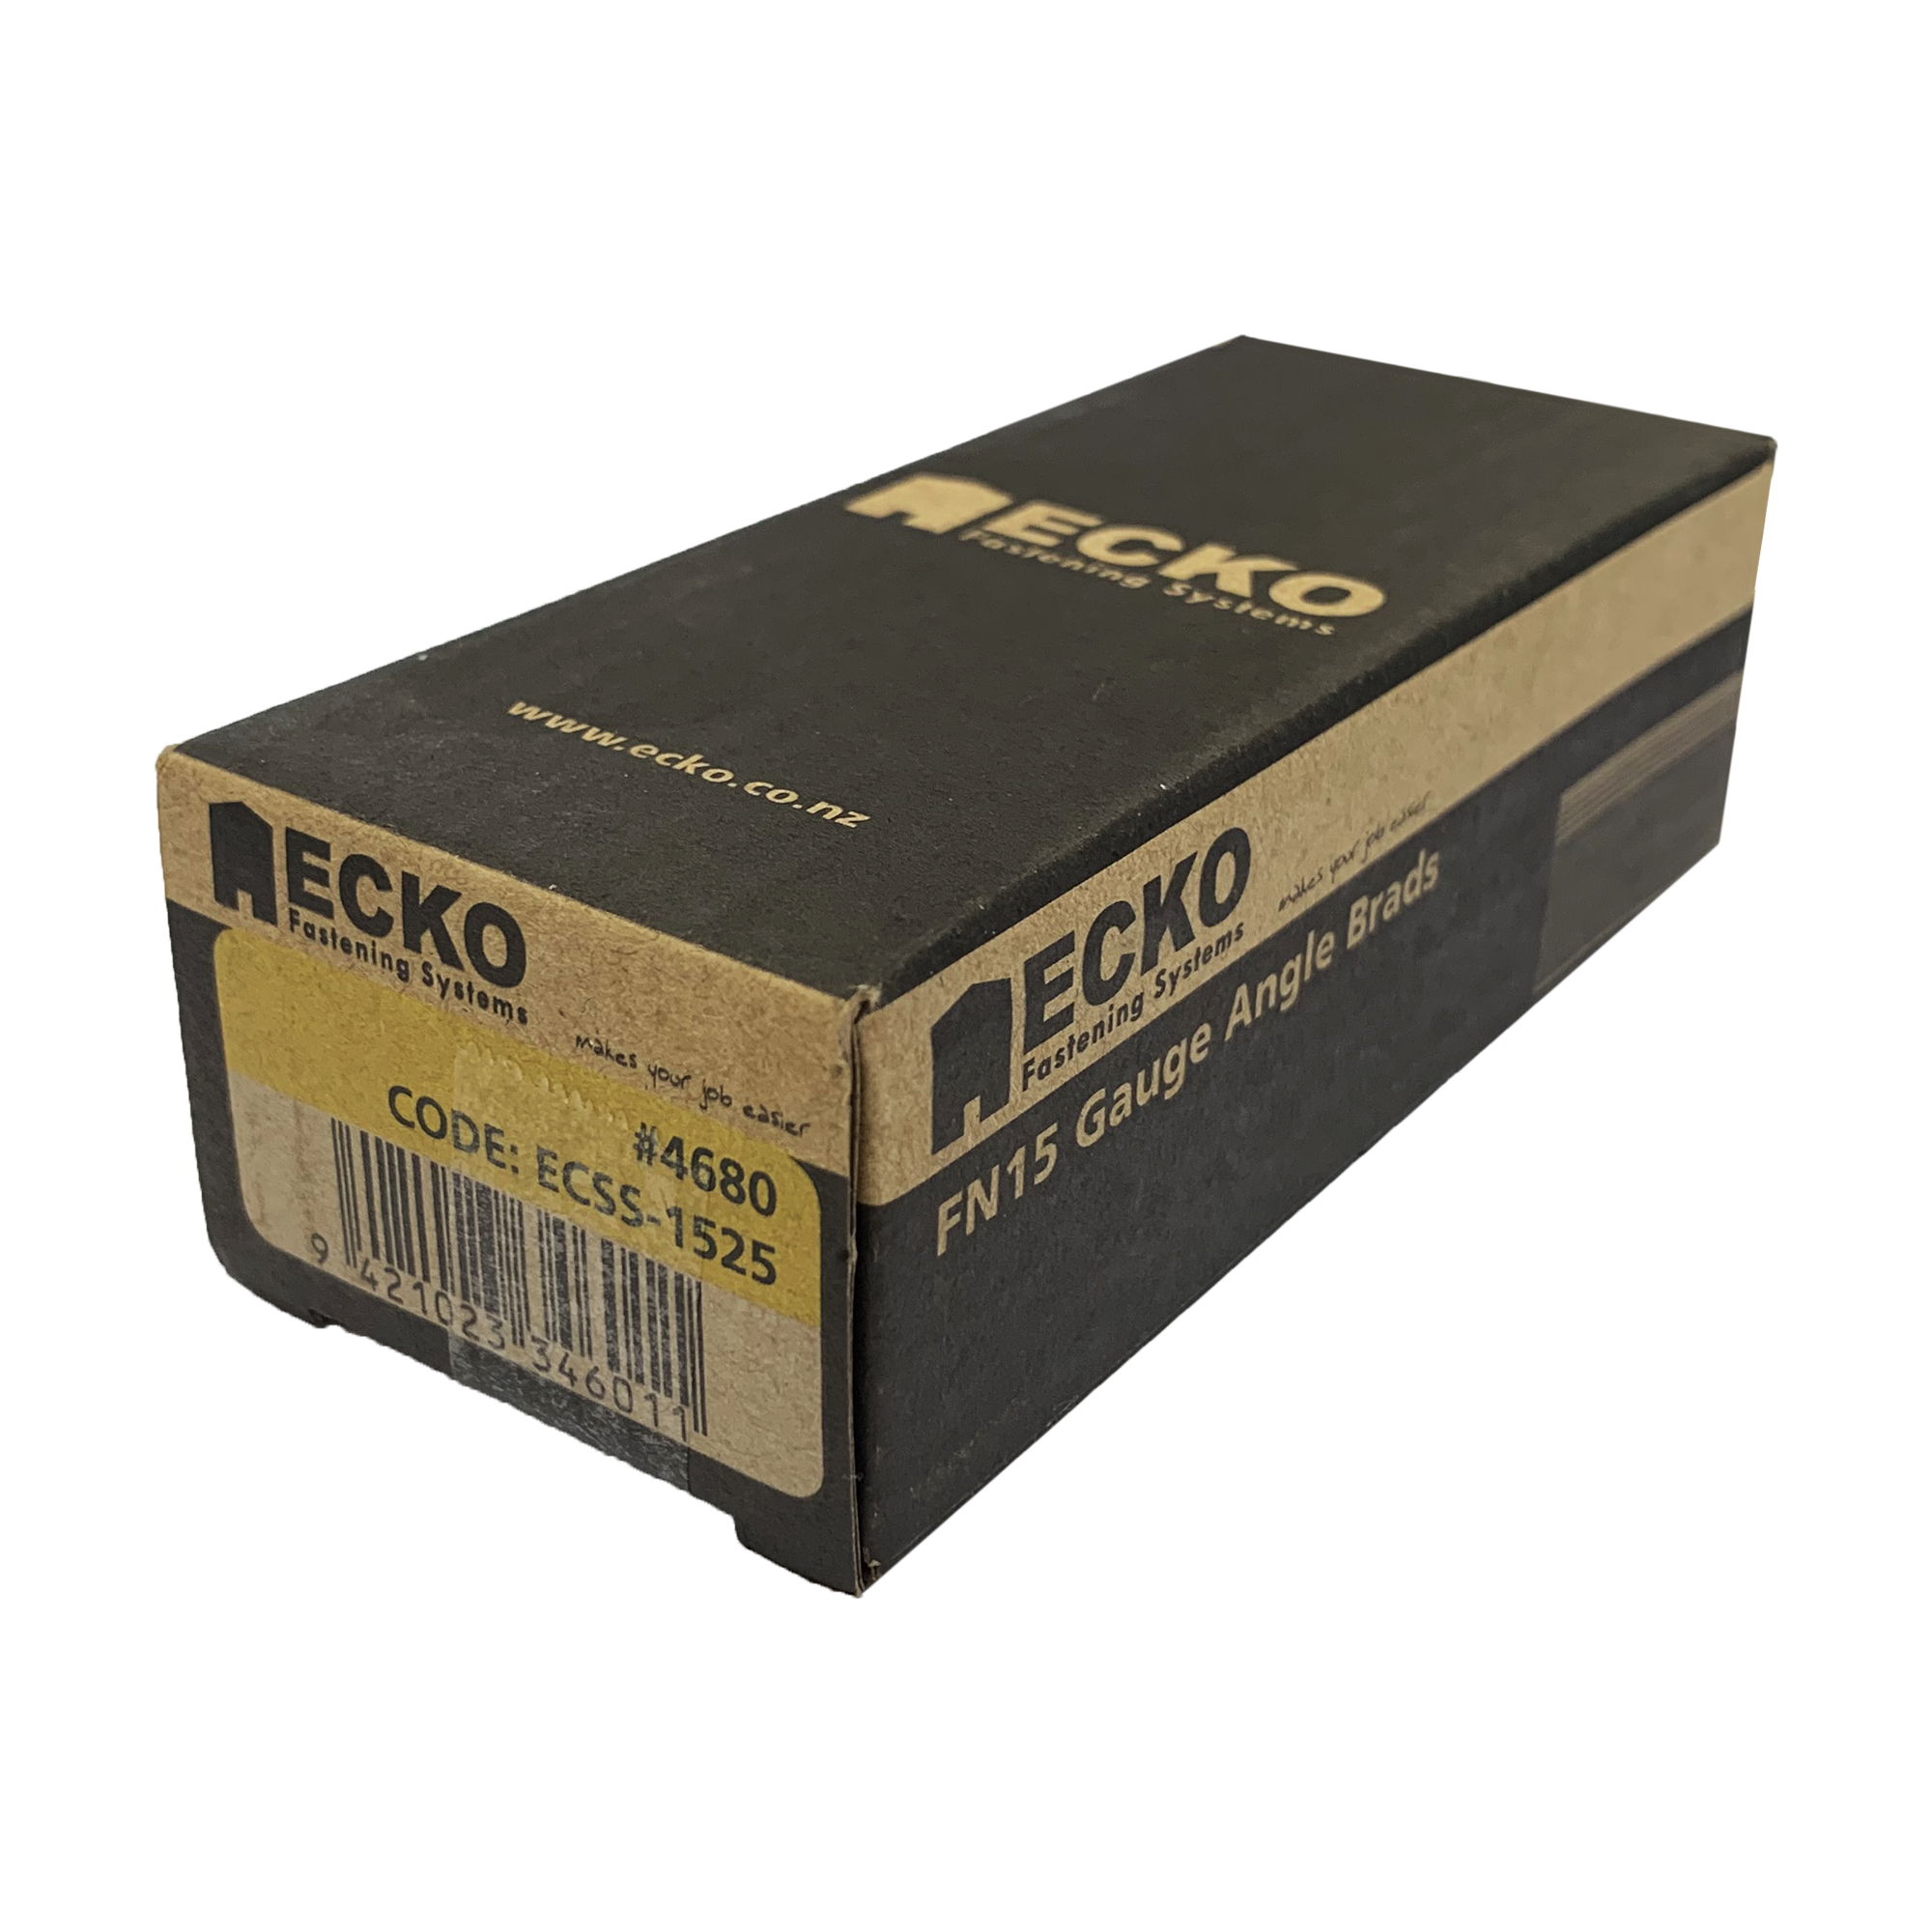 Ecko 15 Gauge S/Steel Angle Brads 25Mm (1000 Box)